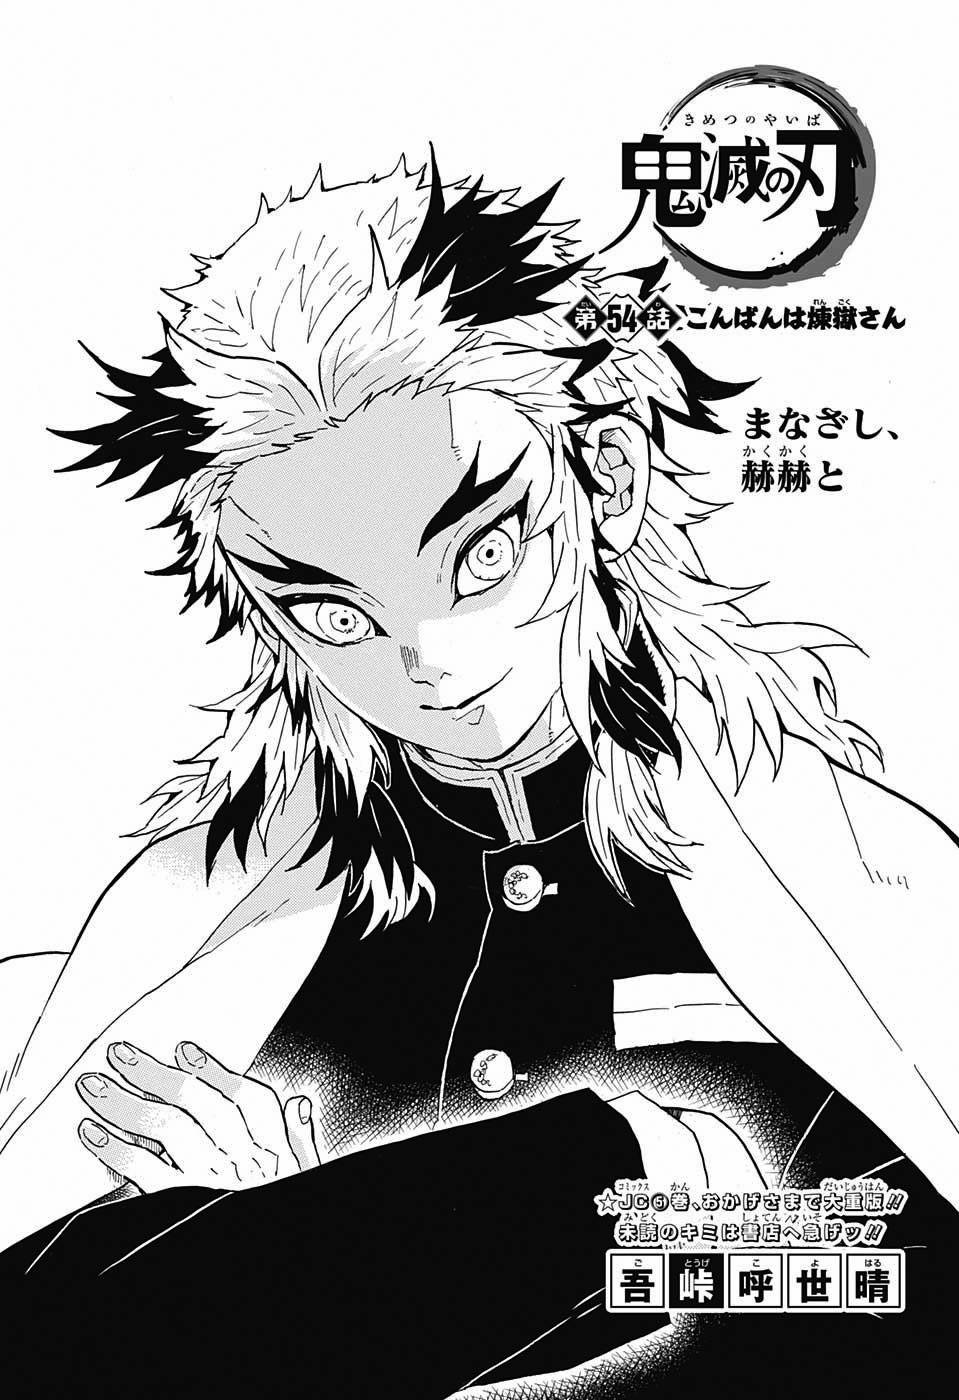 Rengoku Manga Cover In Black And White